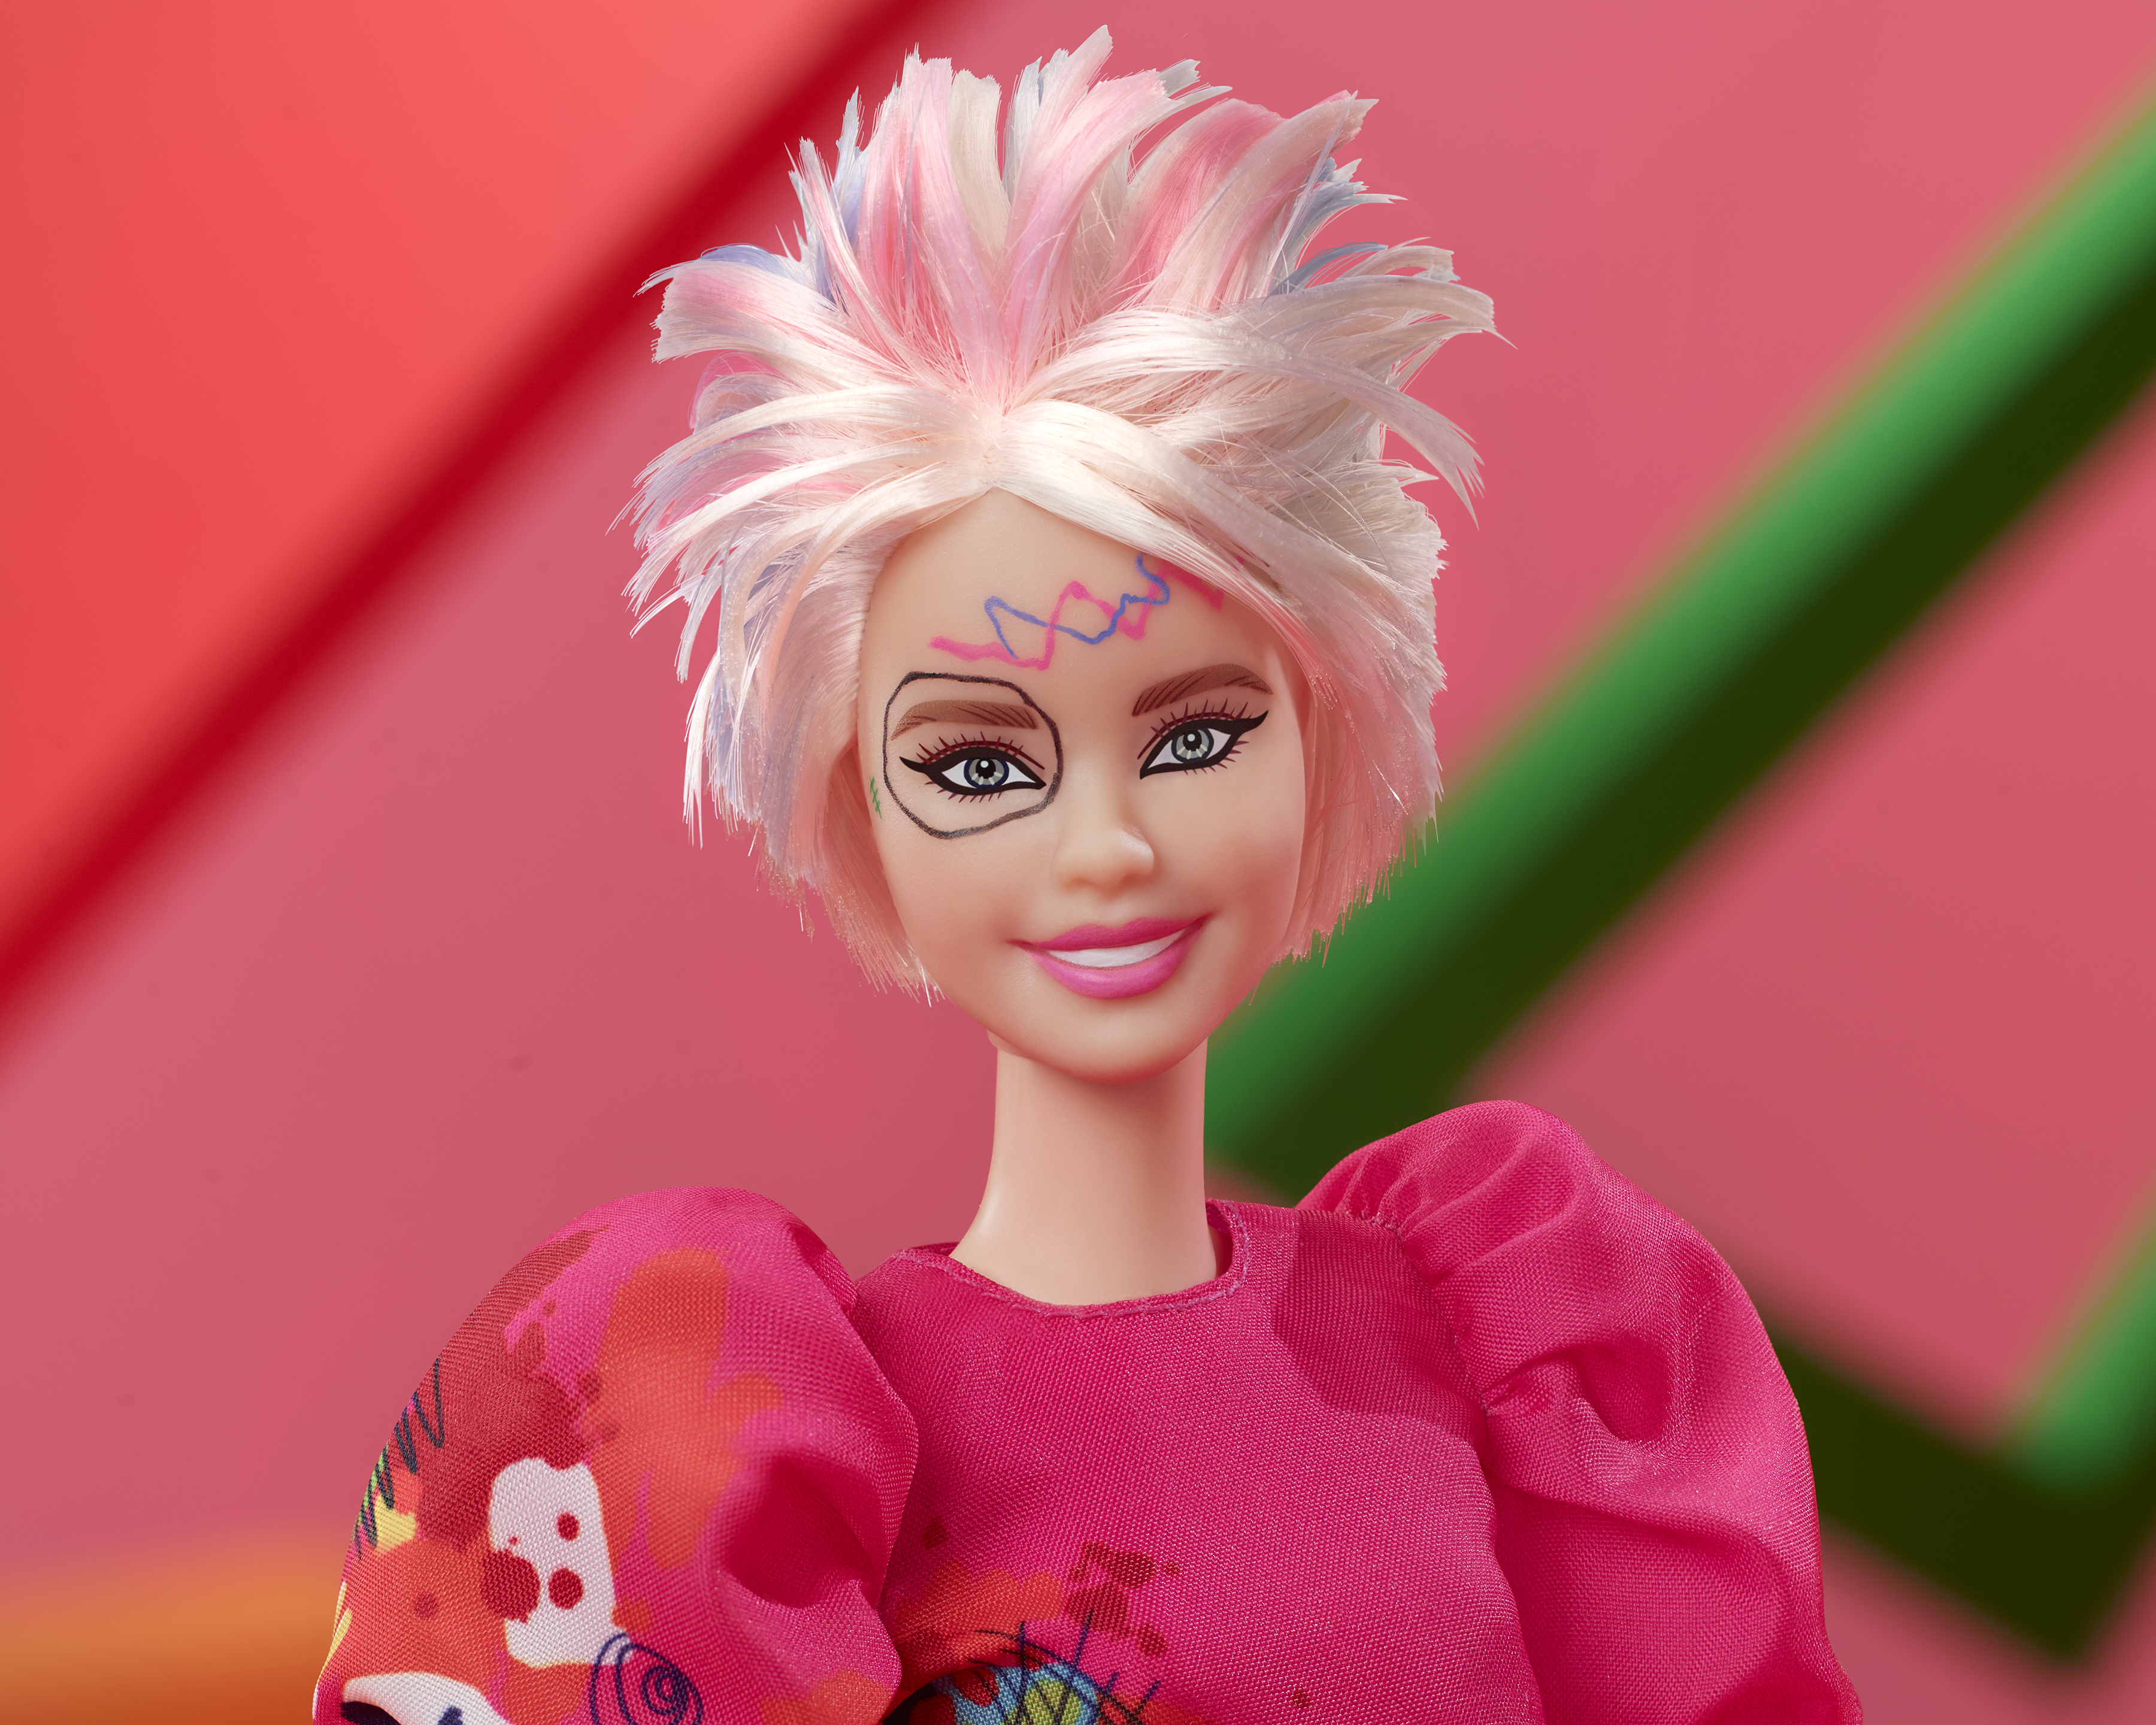 svinekød dobbelt Fantastiske Preorder Mattel's Official Weird Barbie Doll | POPSUGAR Entertainment